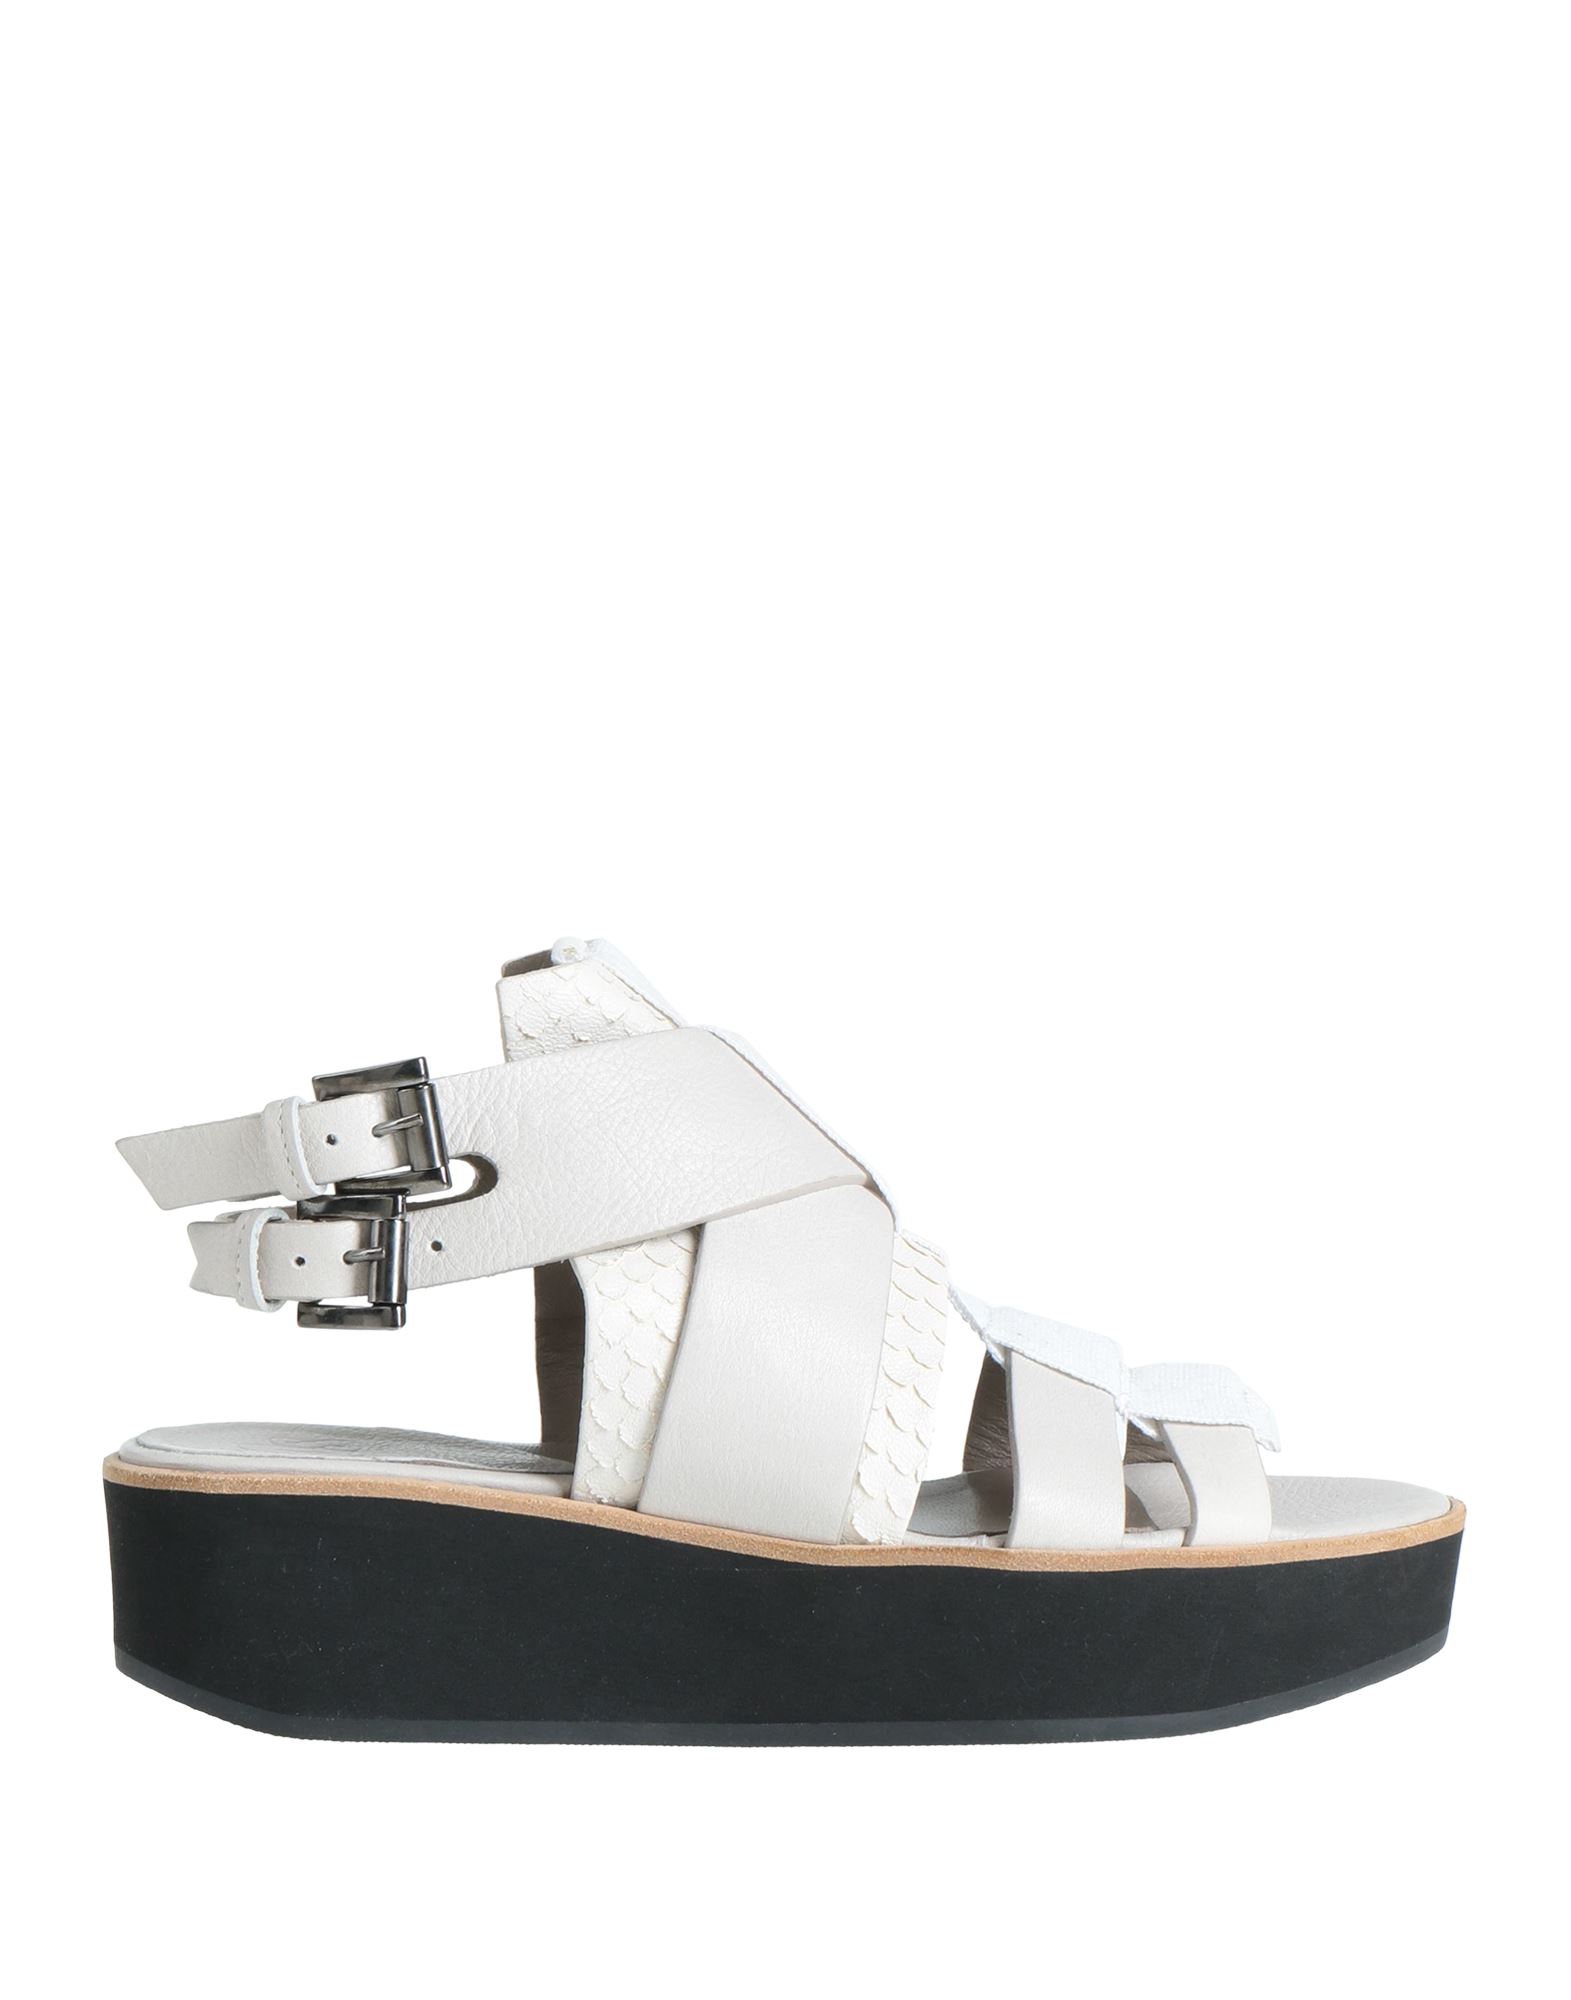 Ixos Sandals In White